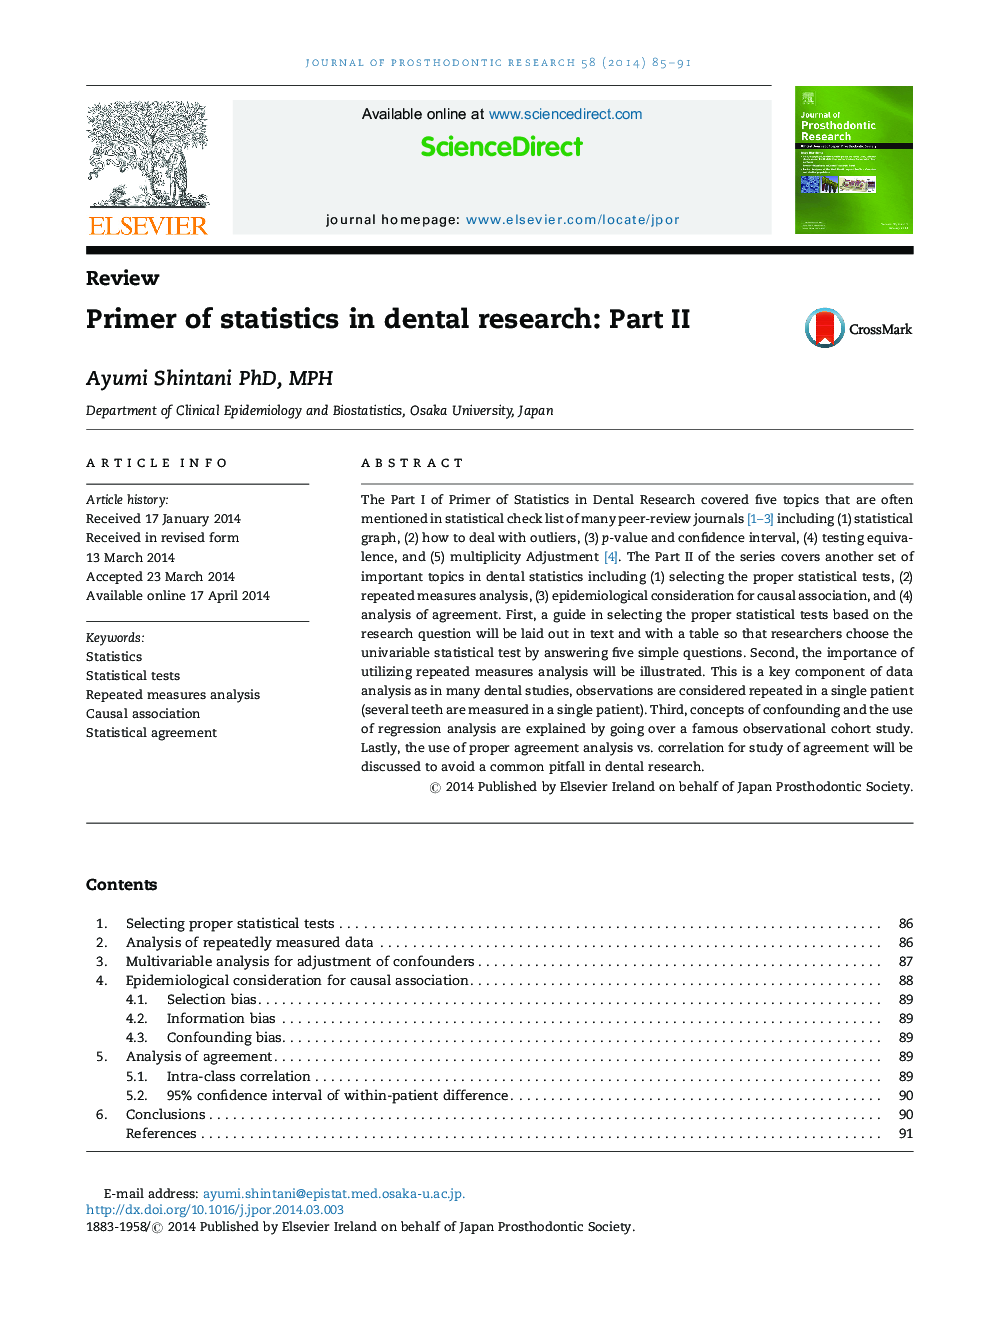 Primer of statistics in dental research: Part II